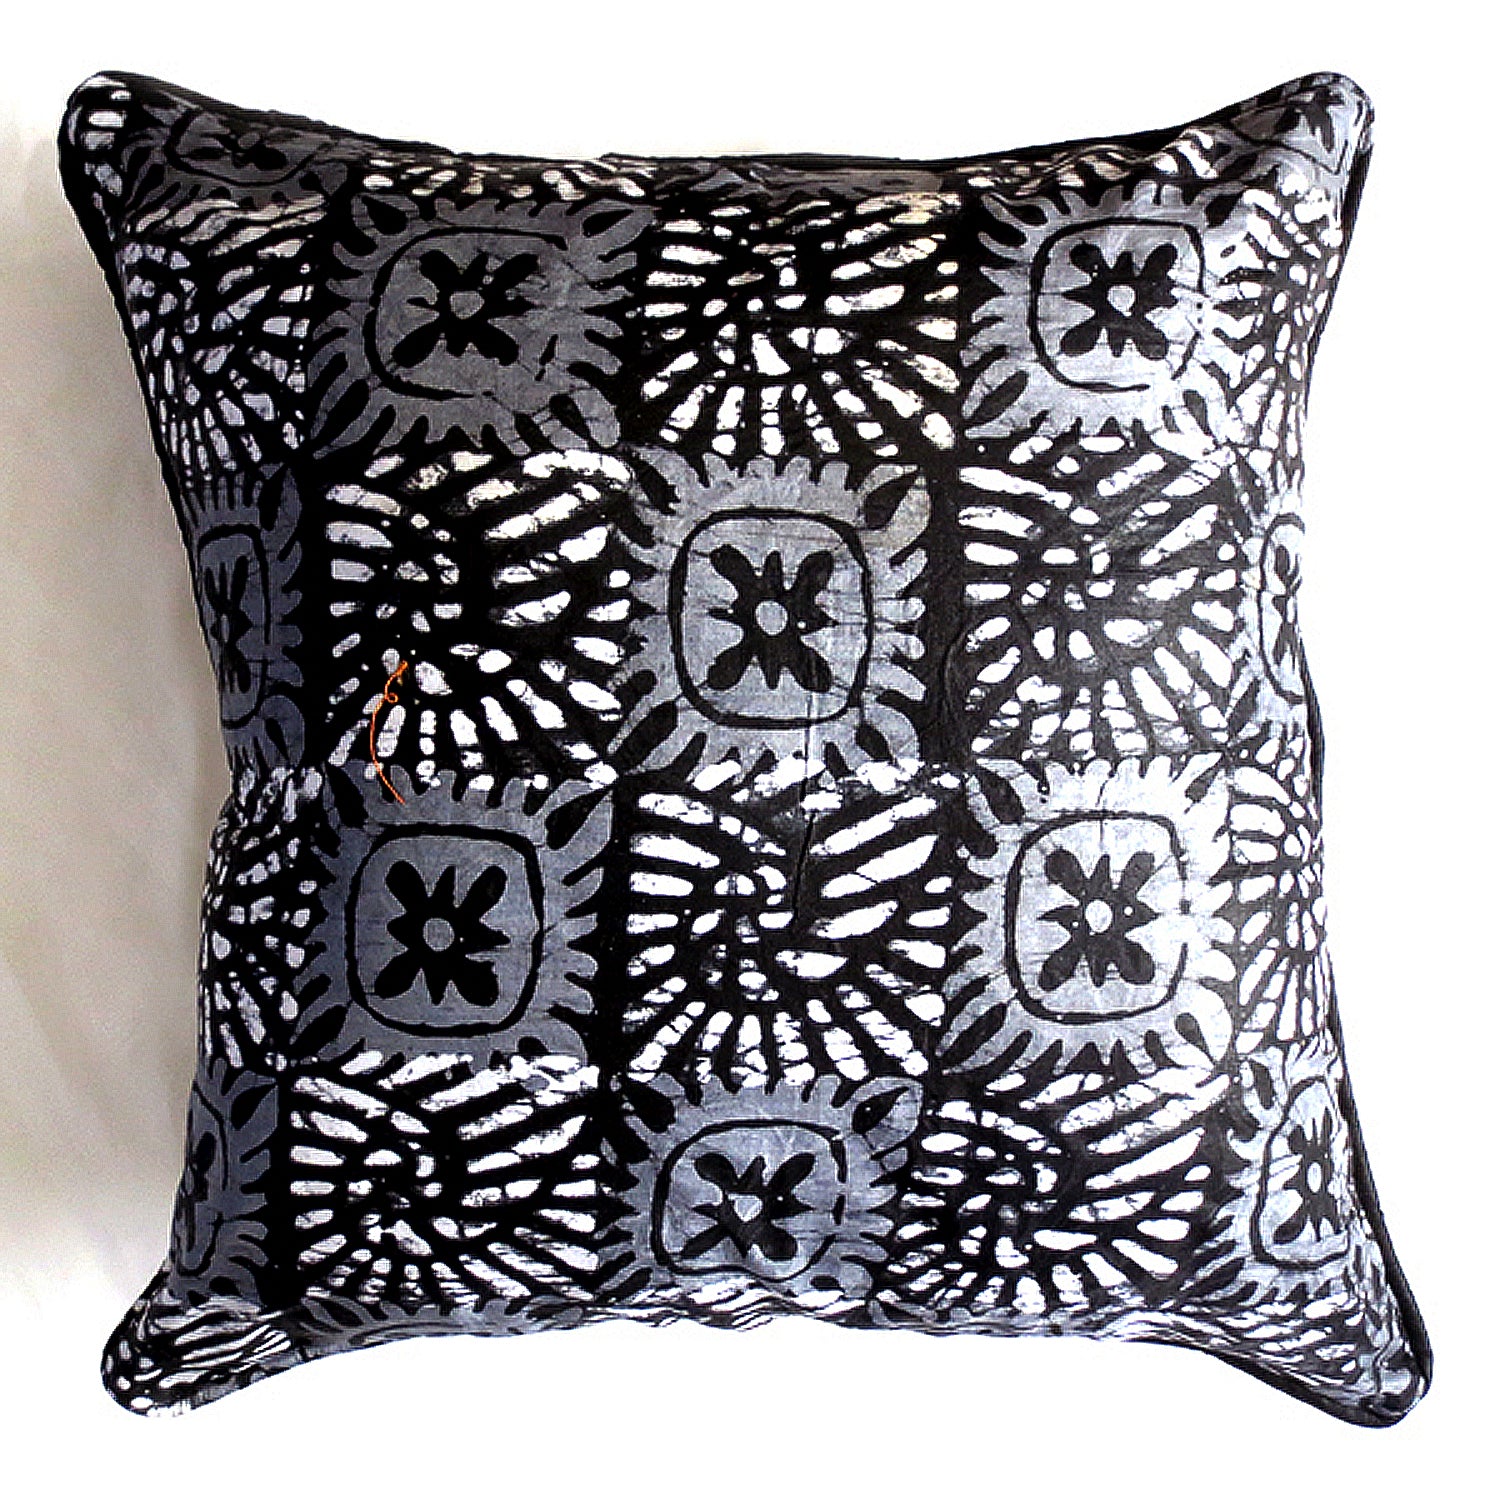 20x20 pillow cover black white